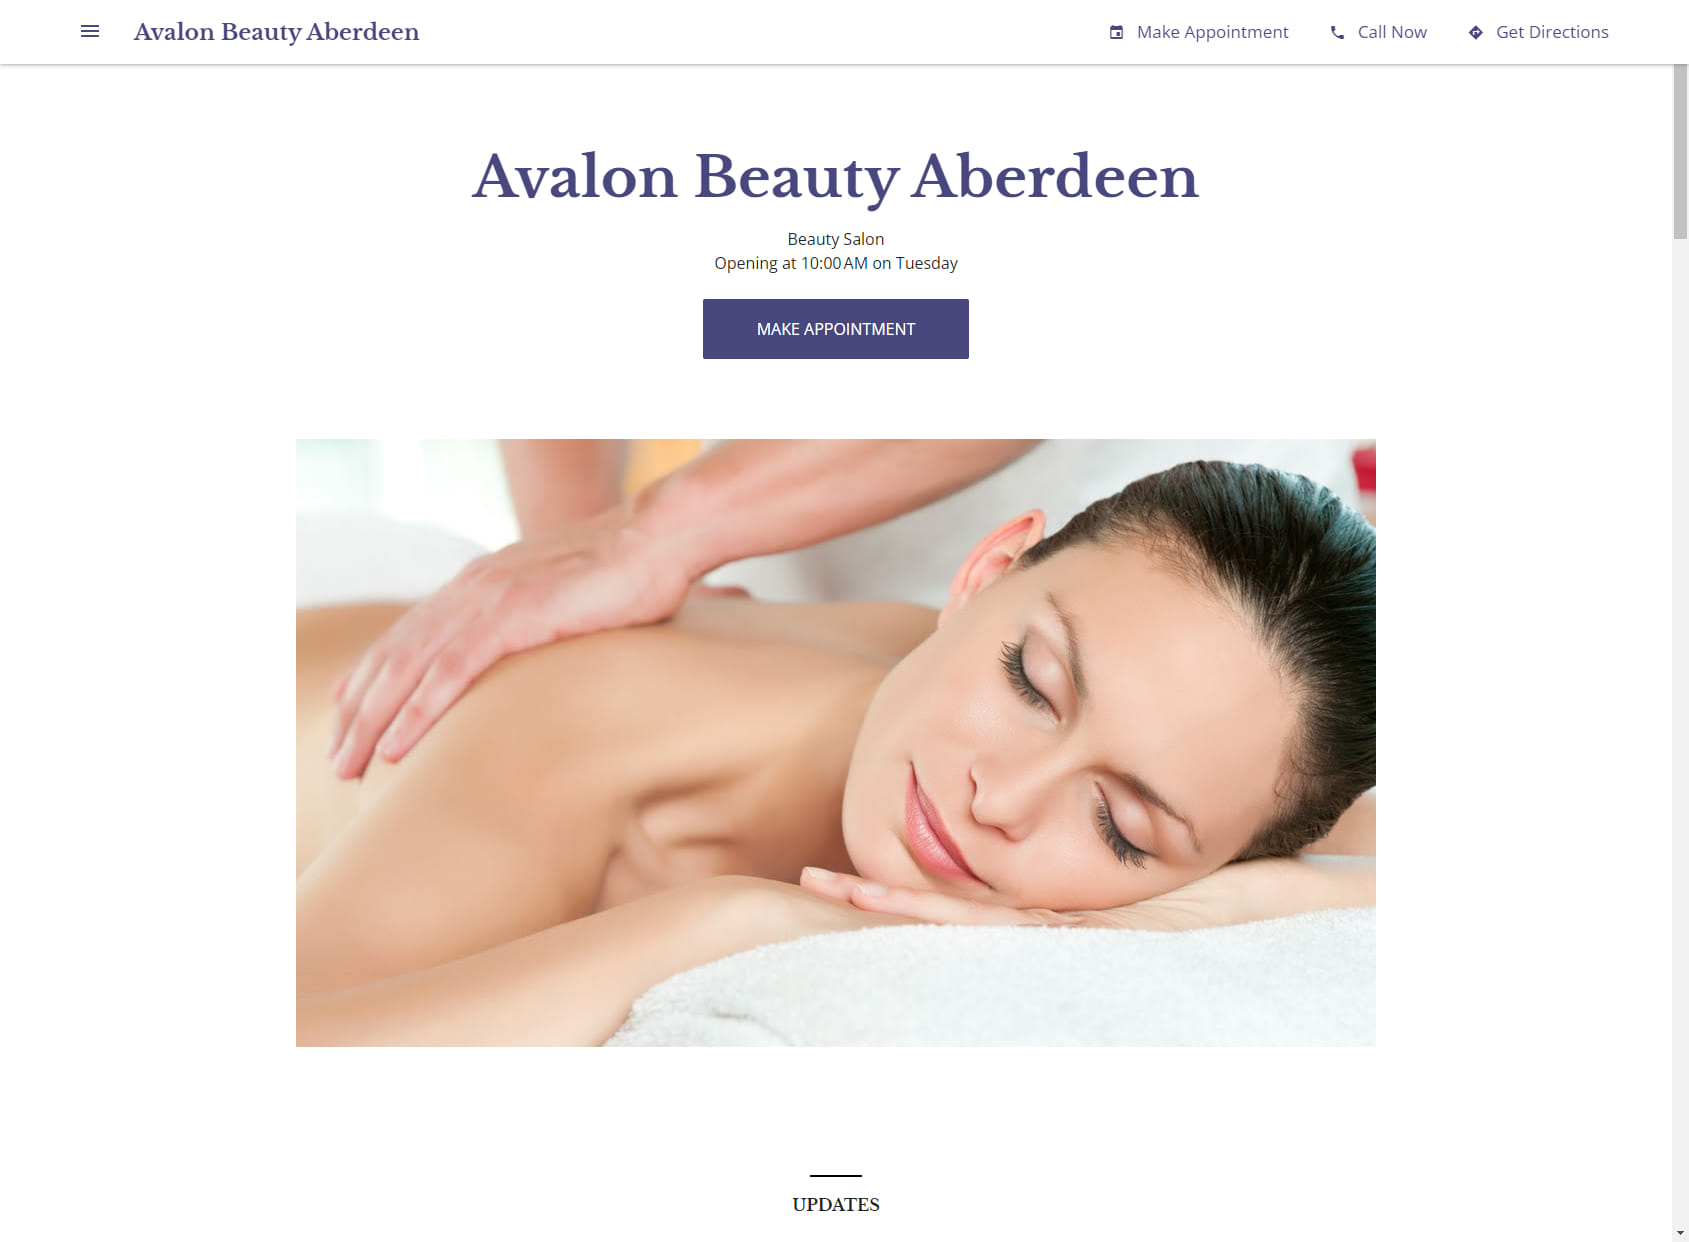 Avalon Beauty Aberdeen